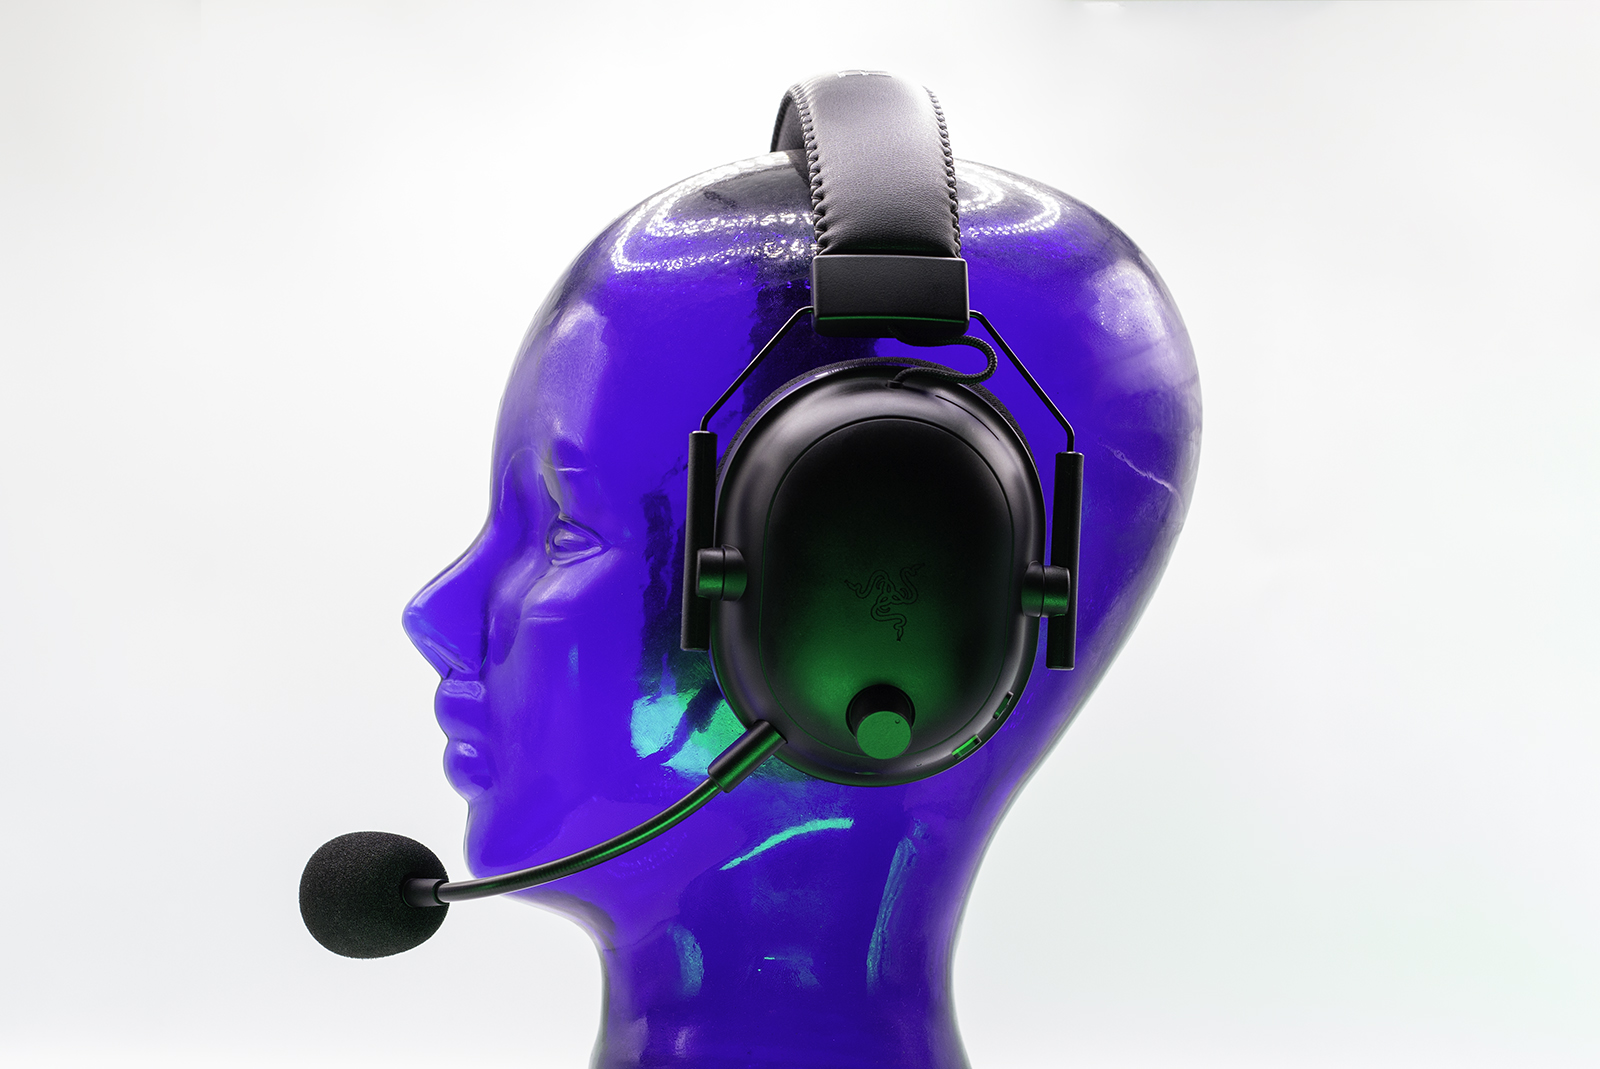 Razer Blackshark V2 Pro headset review: A potent weapon for